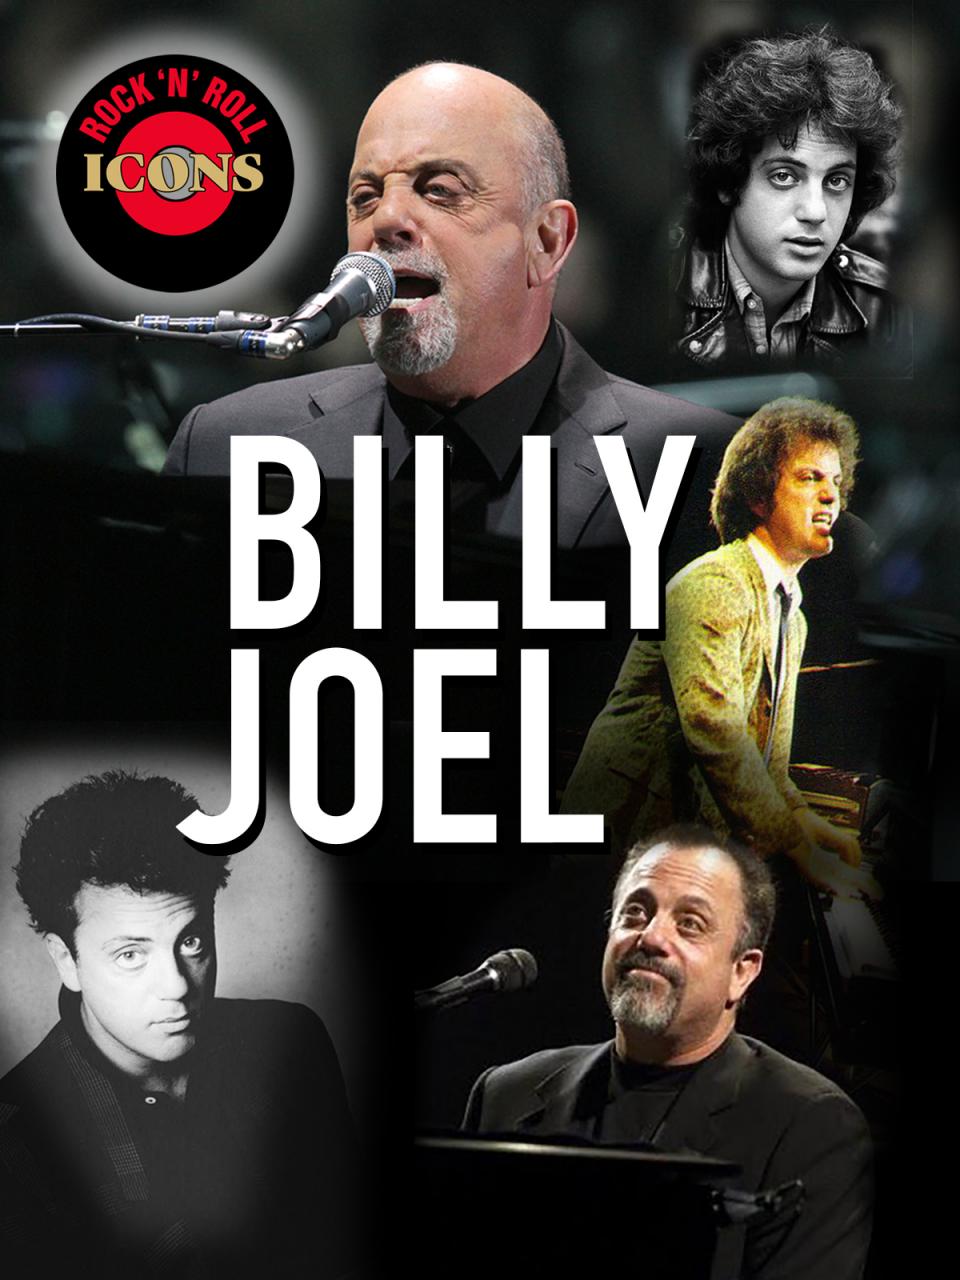 Rock Icons: Billy Joel